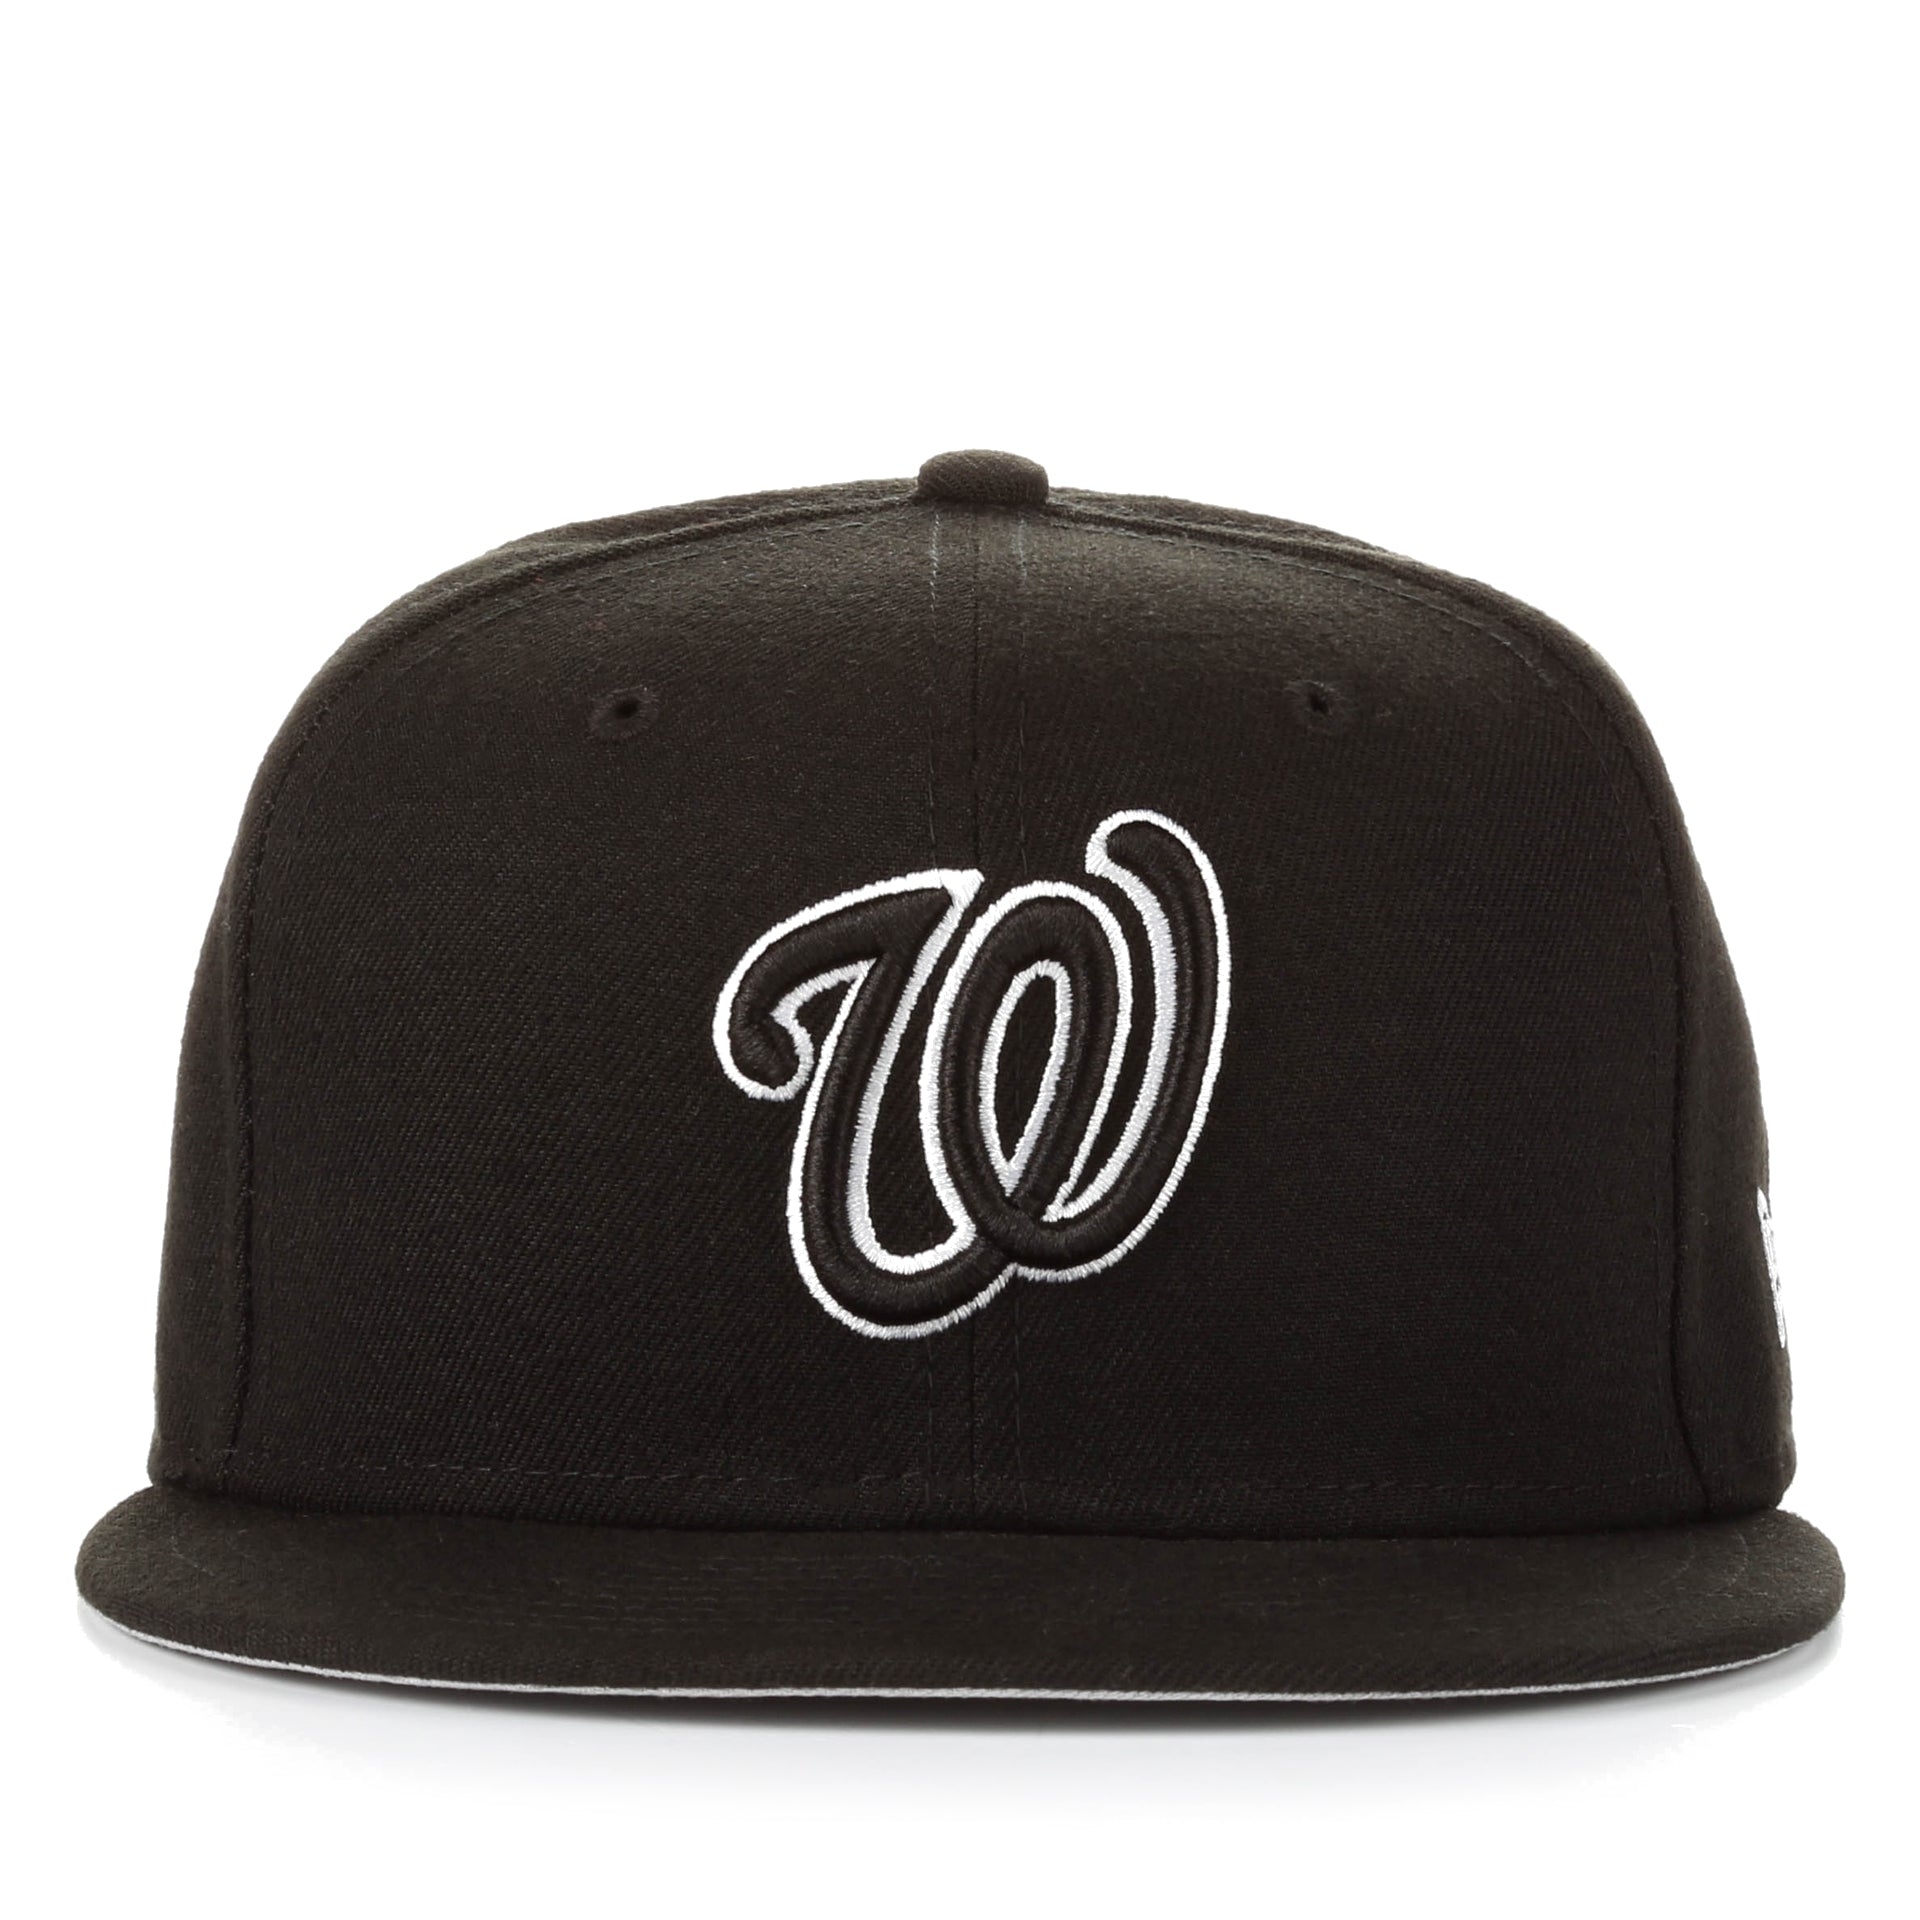 Washington Nationals Fitted Hats  Washington Nationals Baseball Caps